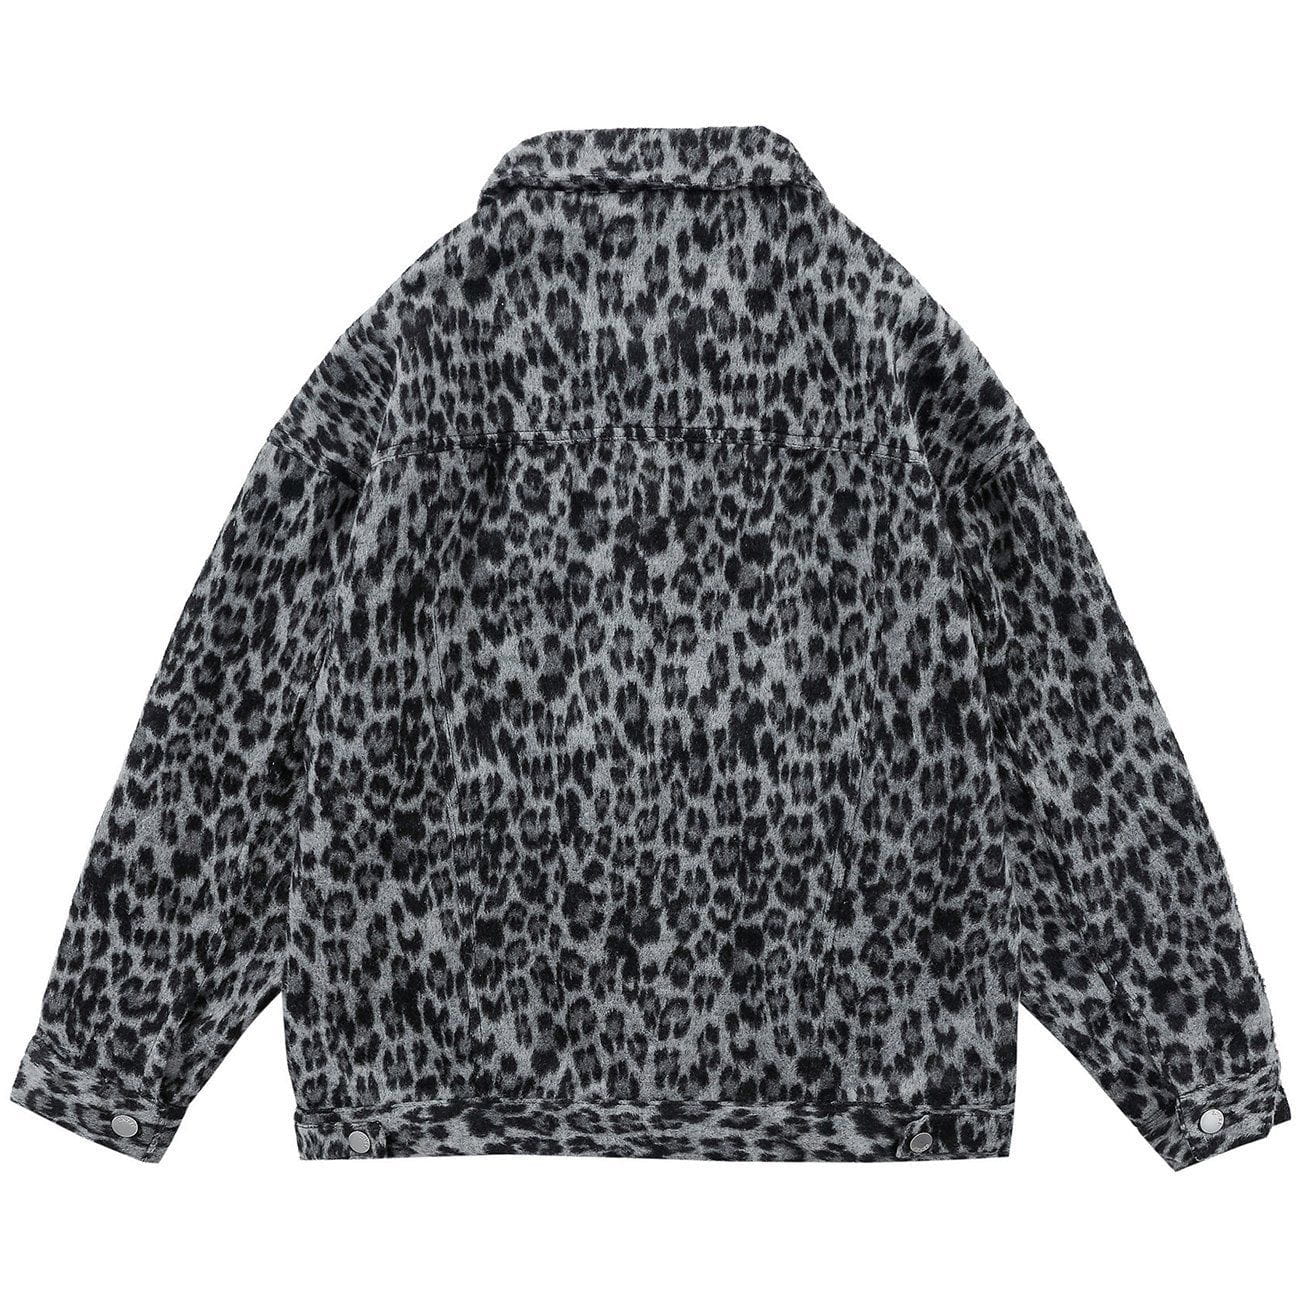 Sneakerland™ - Vintage Leopard Print Jacket